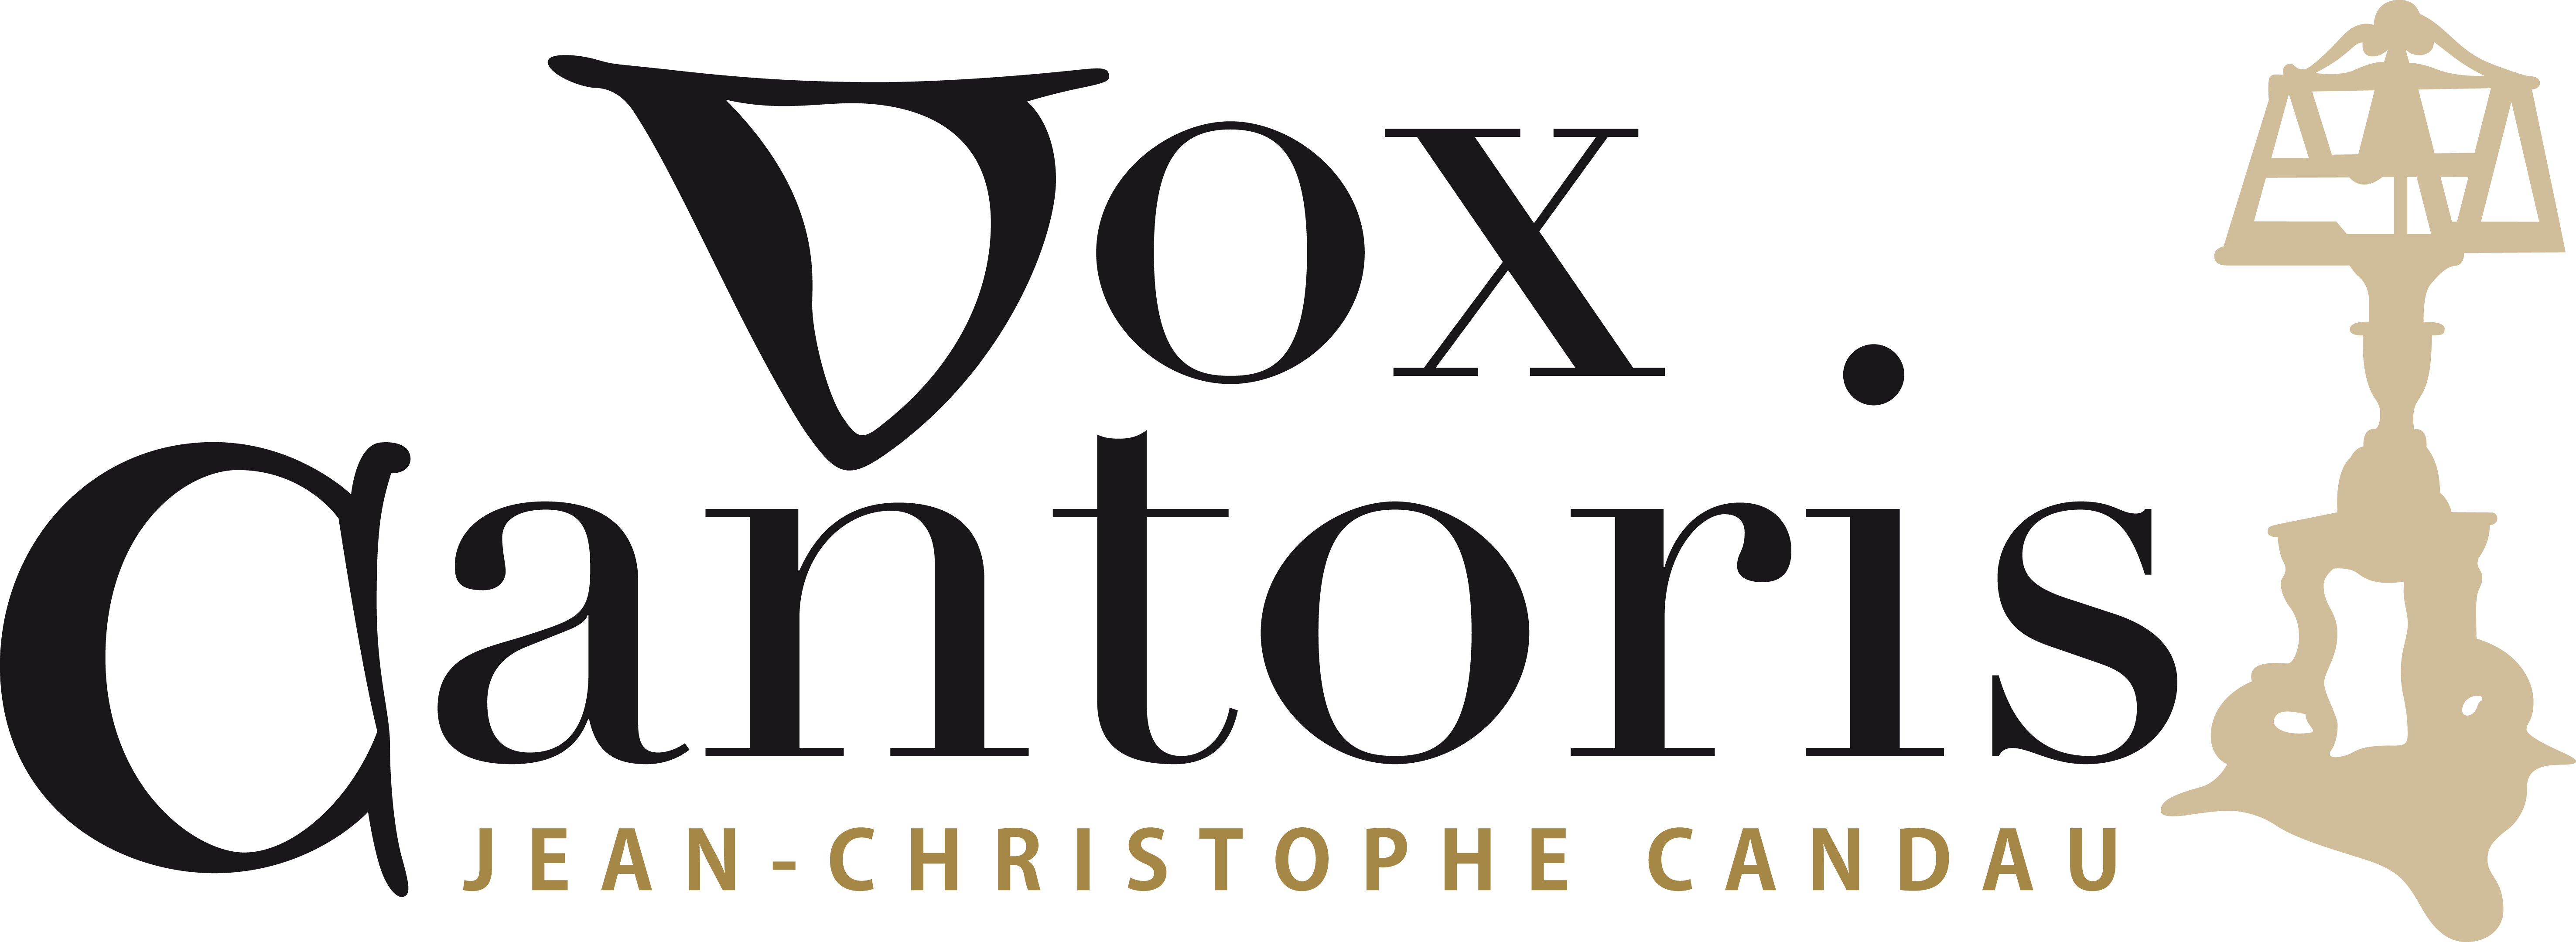 Vox Cantoris